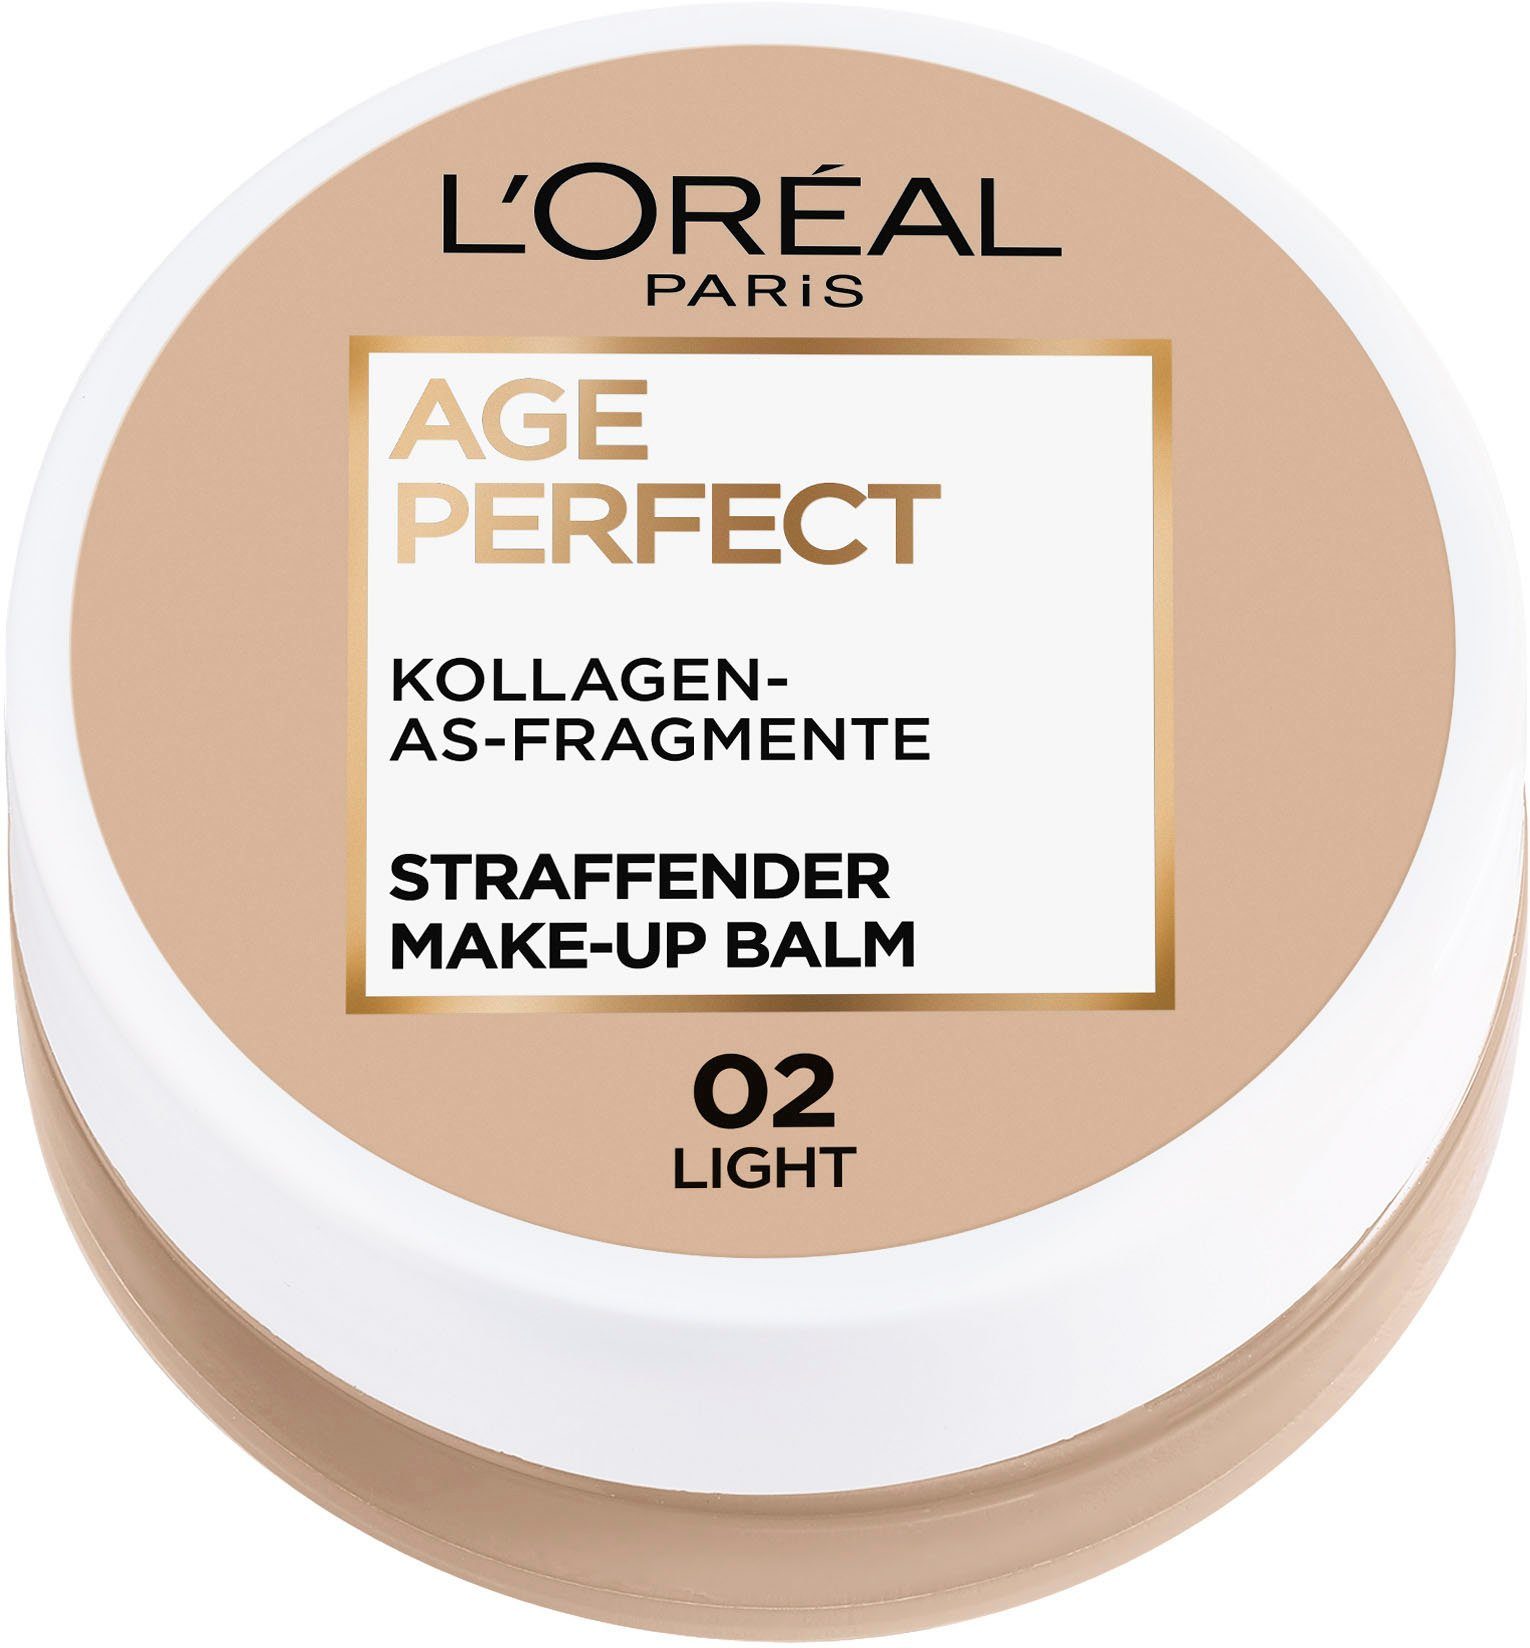 L'ORÉAL PARIS Foundation 02 Perfect Balm Light Perfect Make-up Make-up Balm, Age Age